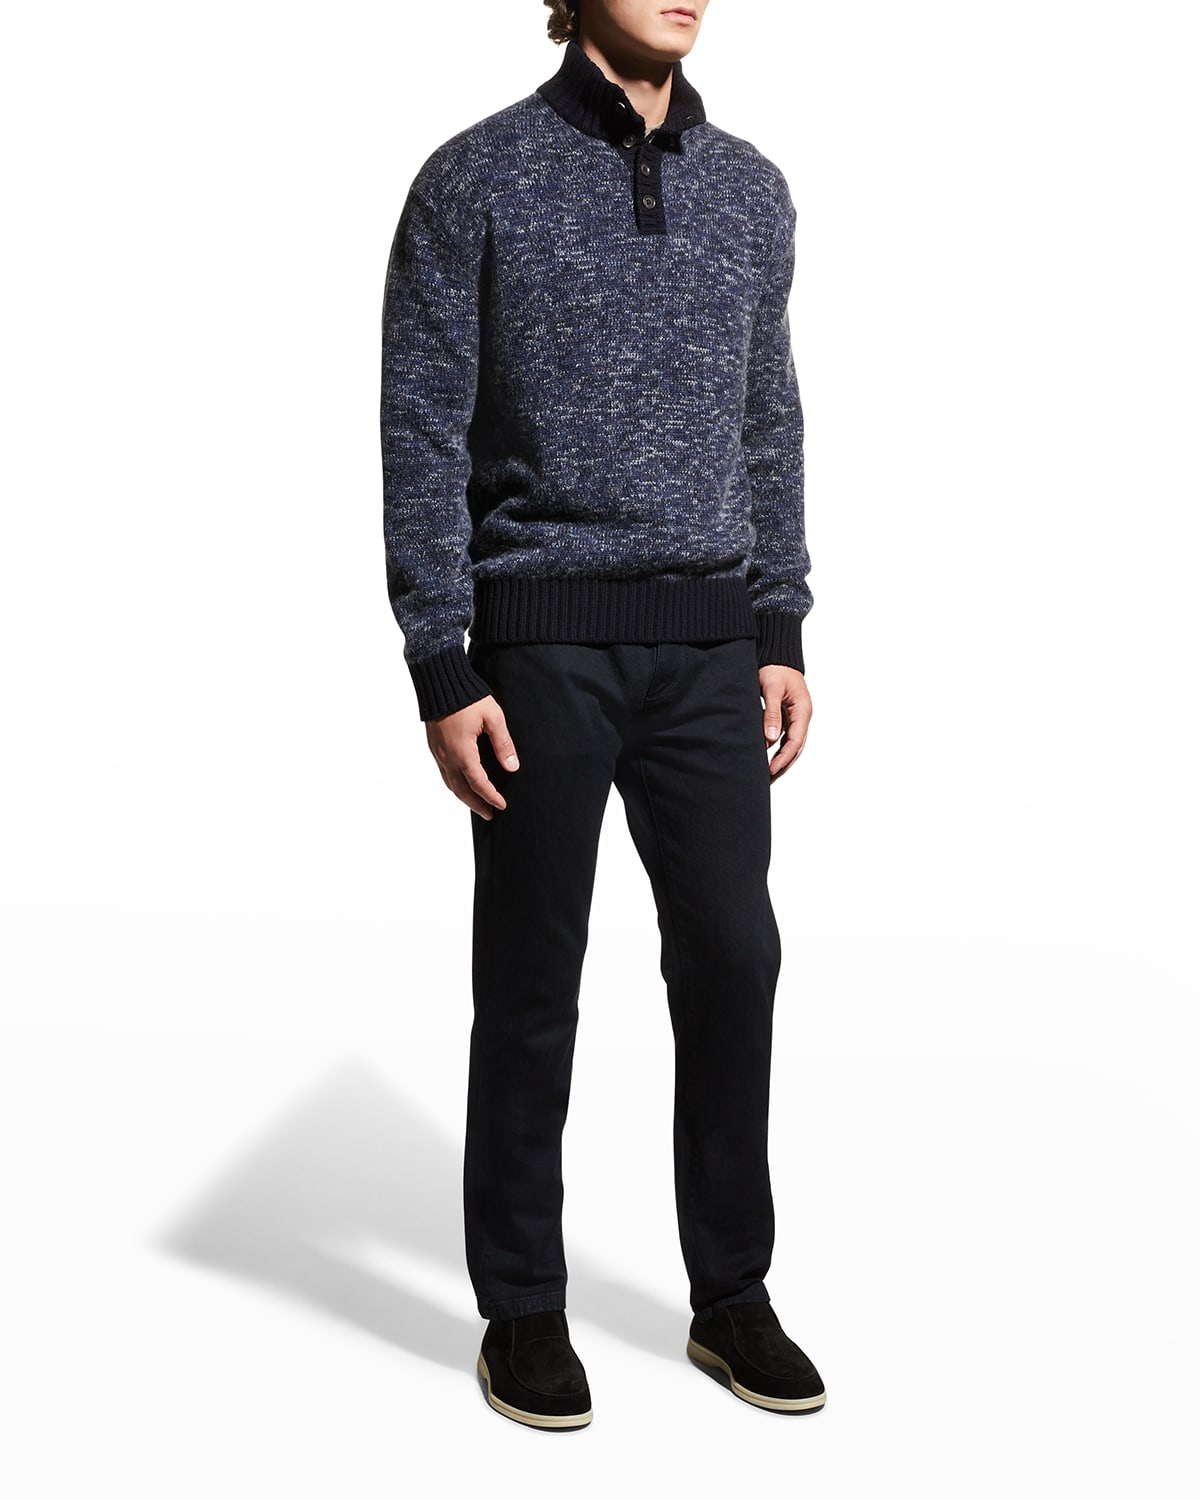 Tarland Cashmere/Silk 1/4-Button Sweater